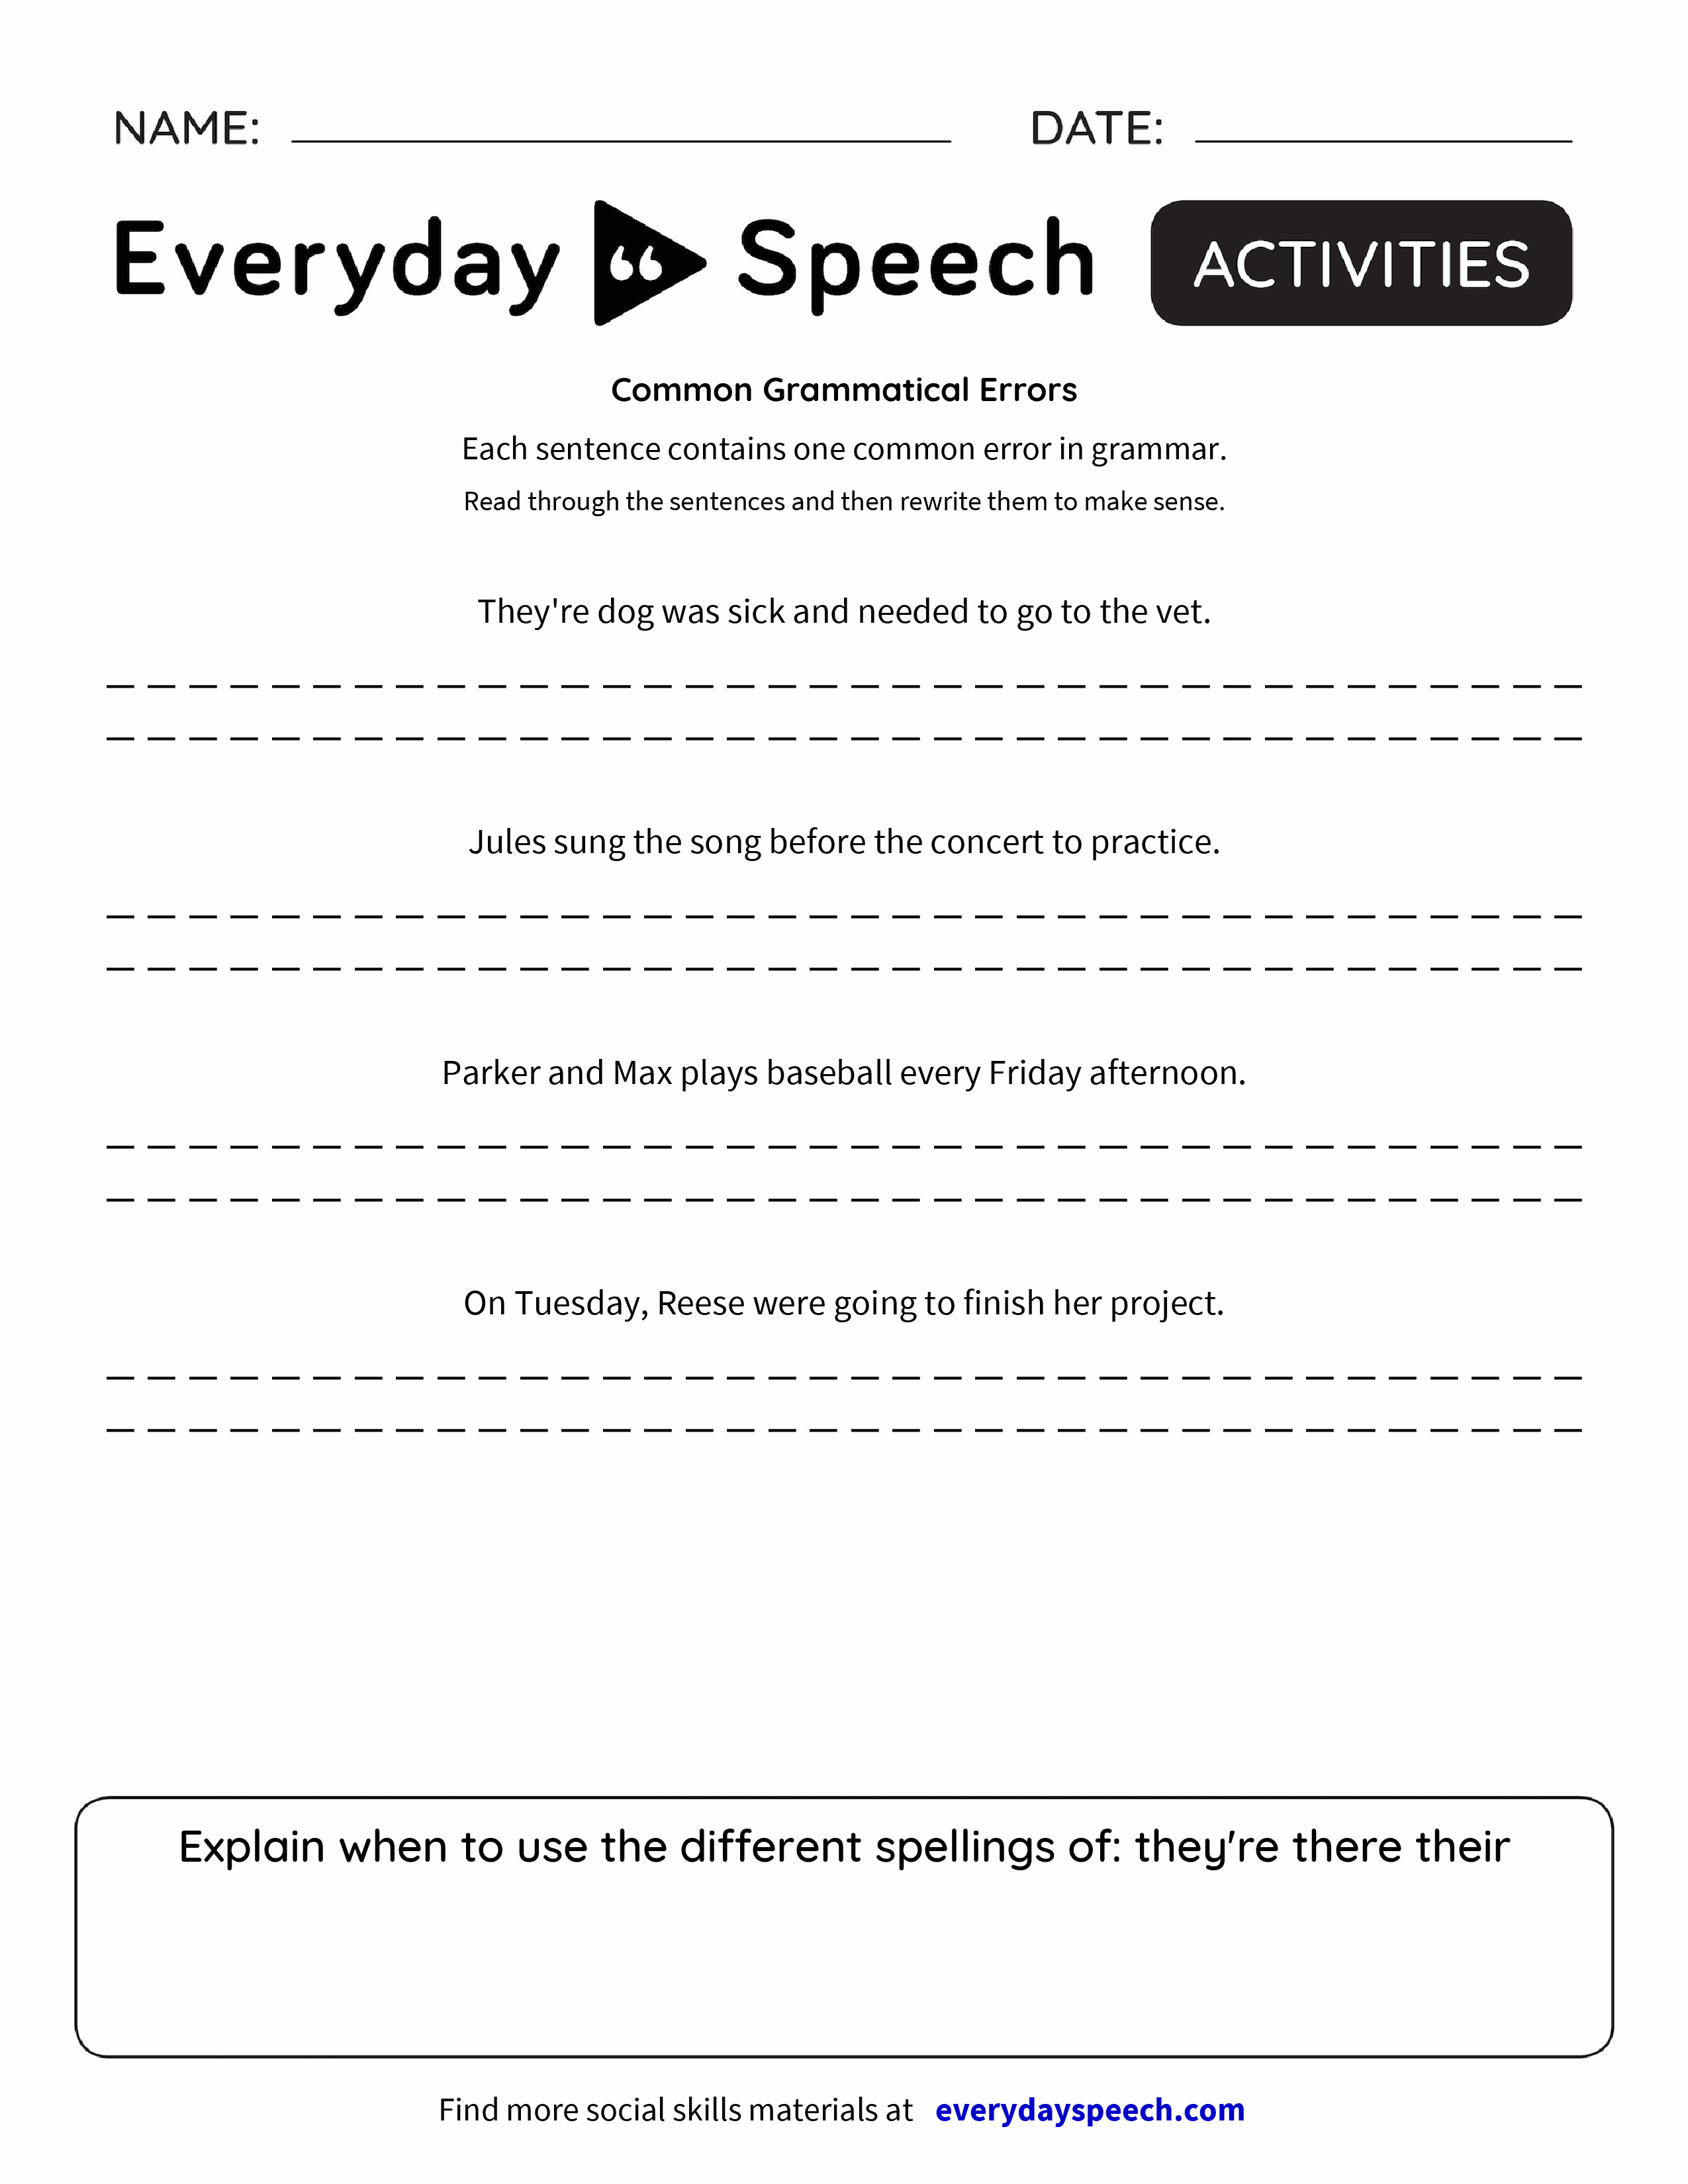 Common Grammatical Errors Everyday Speech Everyday Speech